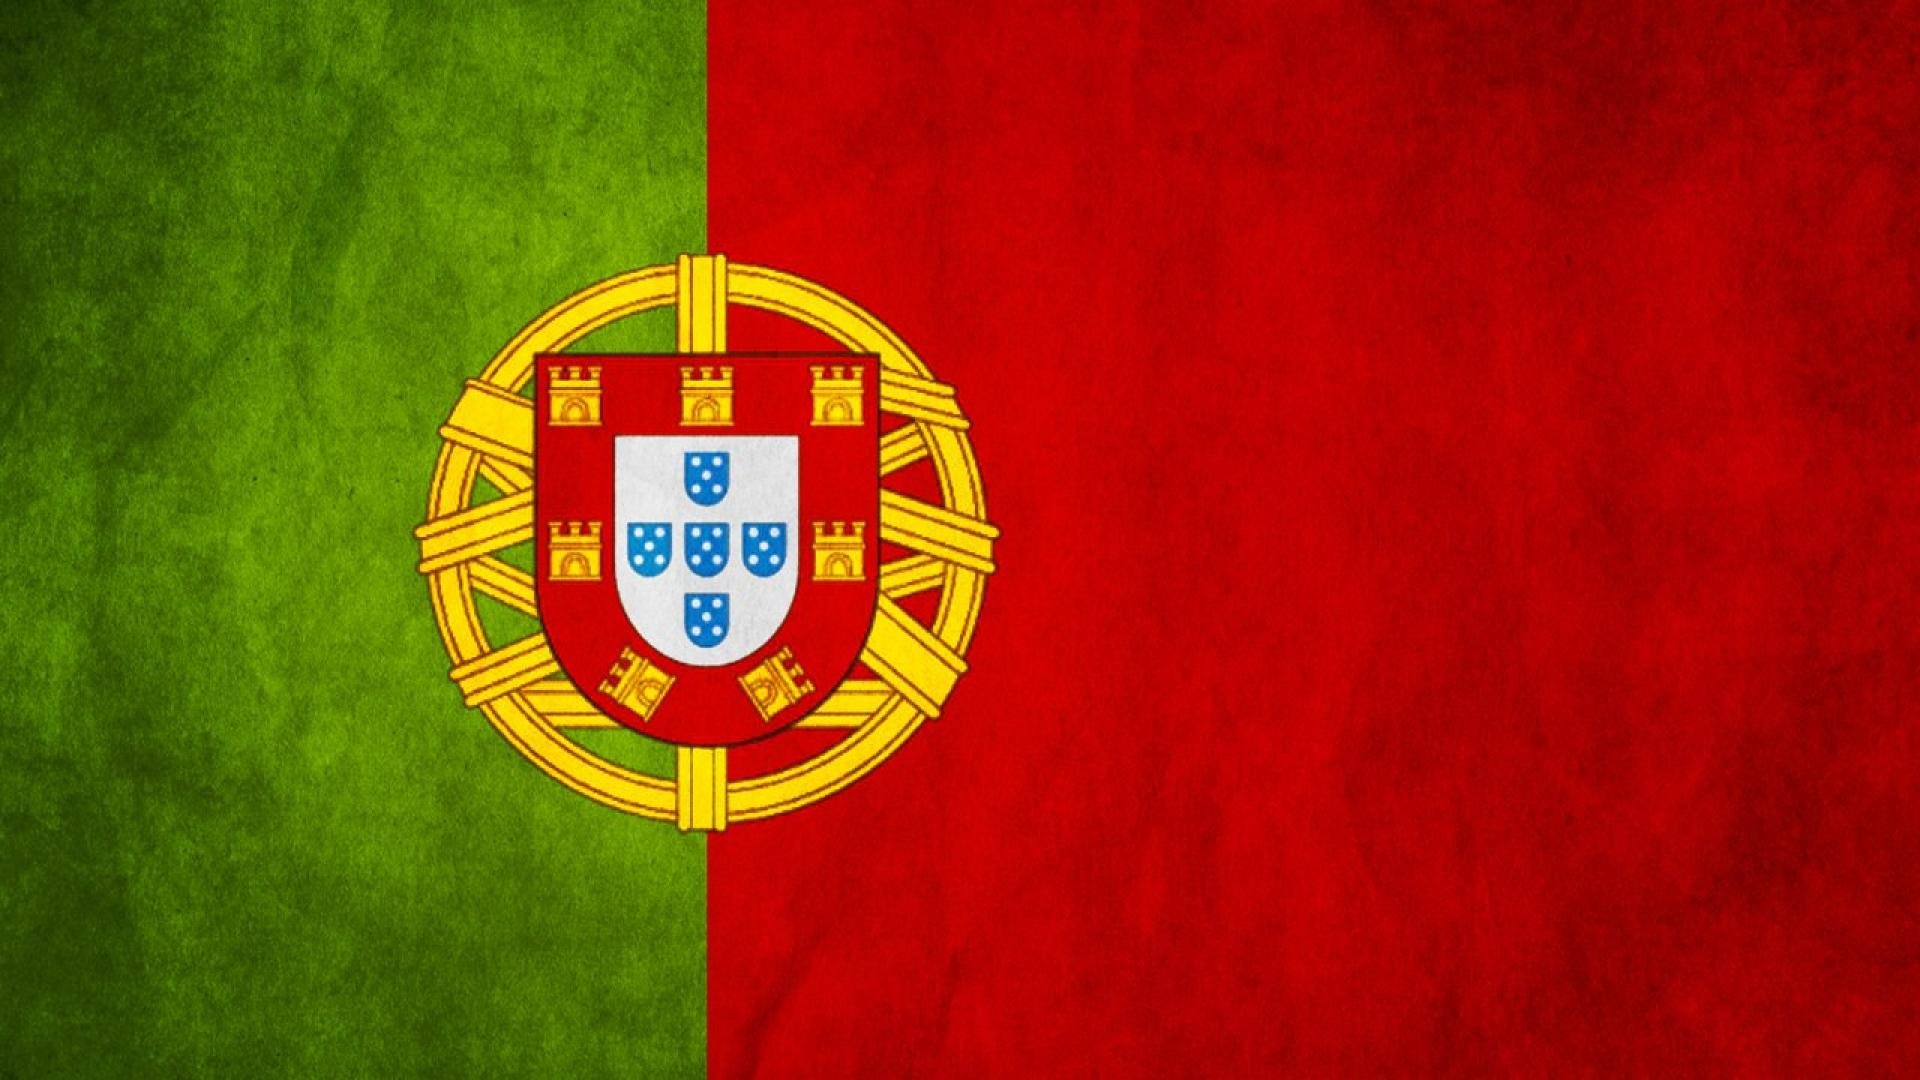 PORTUGAL soccer (46) wallpaper | 1920x1080 | 362419 | WallpaperUP